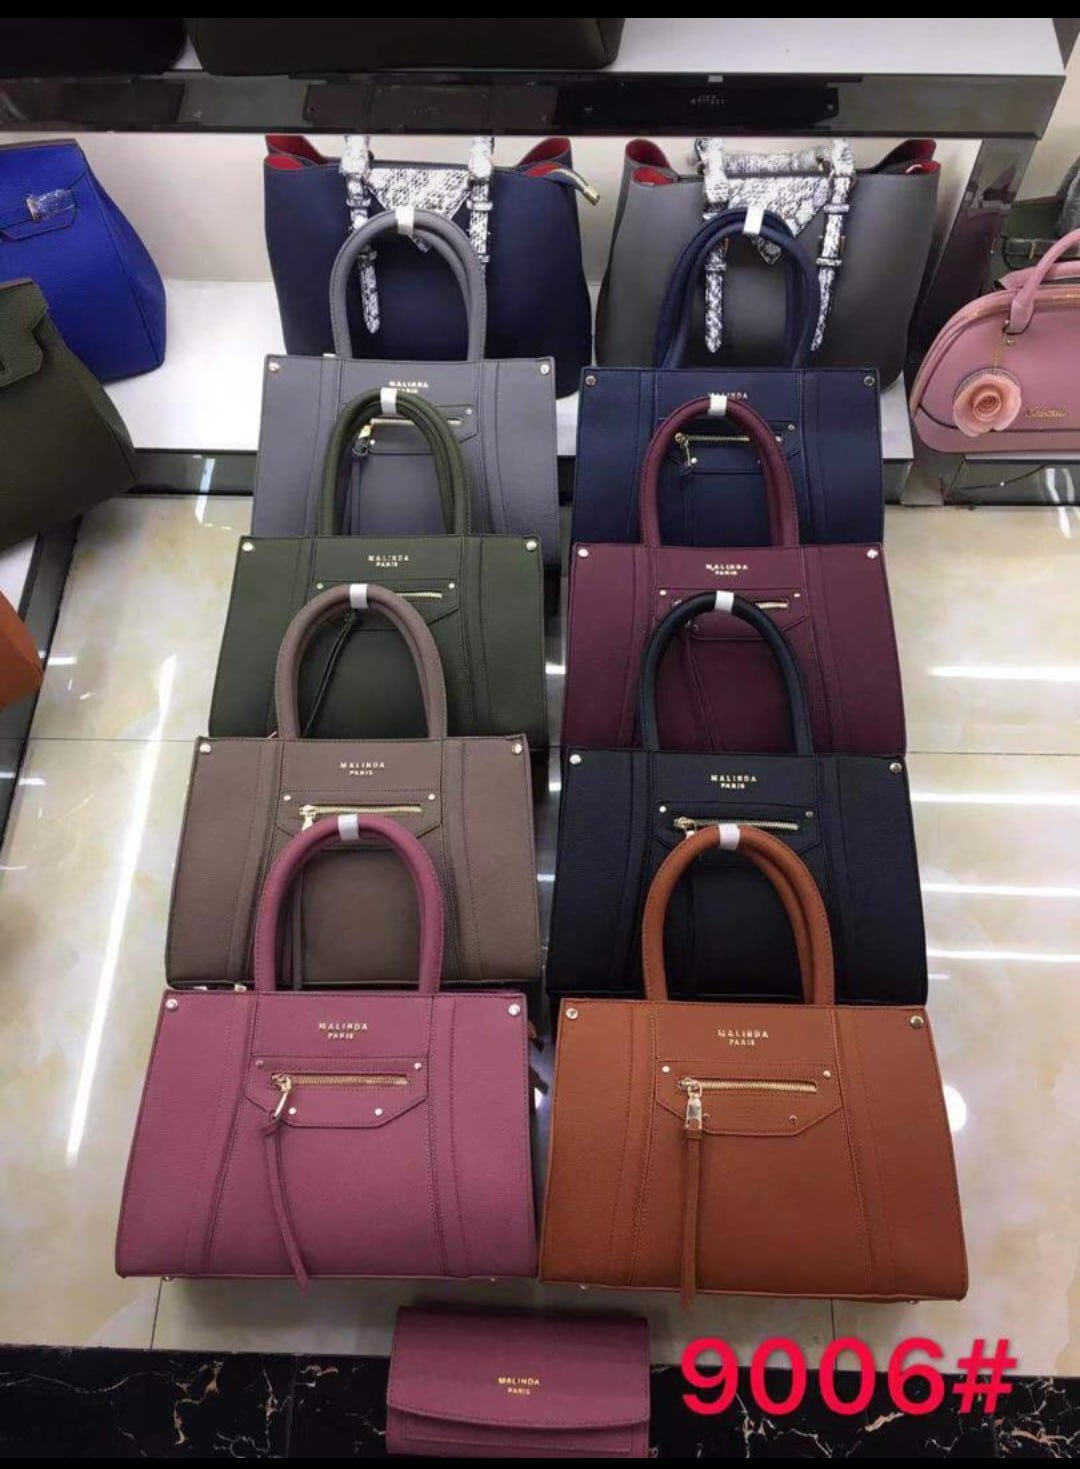 Handbags: Buy Latest Handbags Online at Best Prices - Zouk